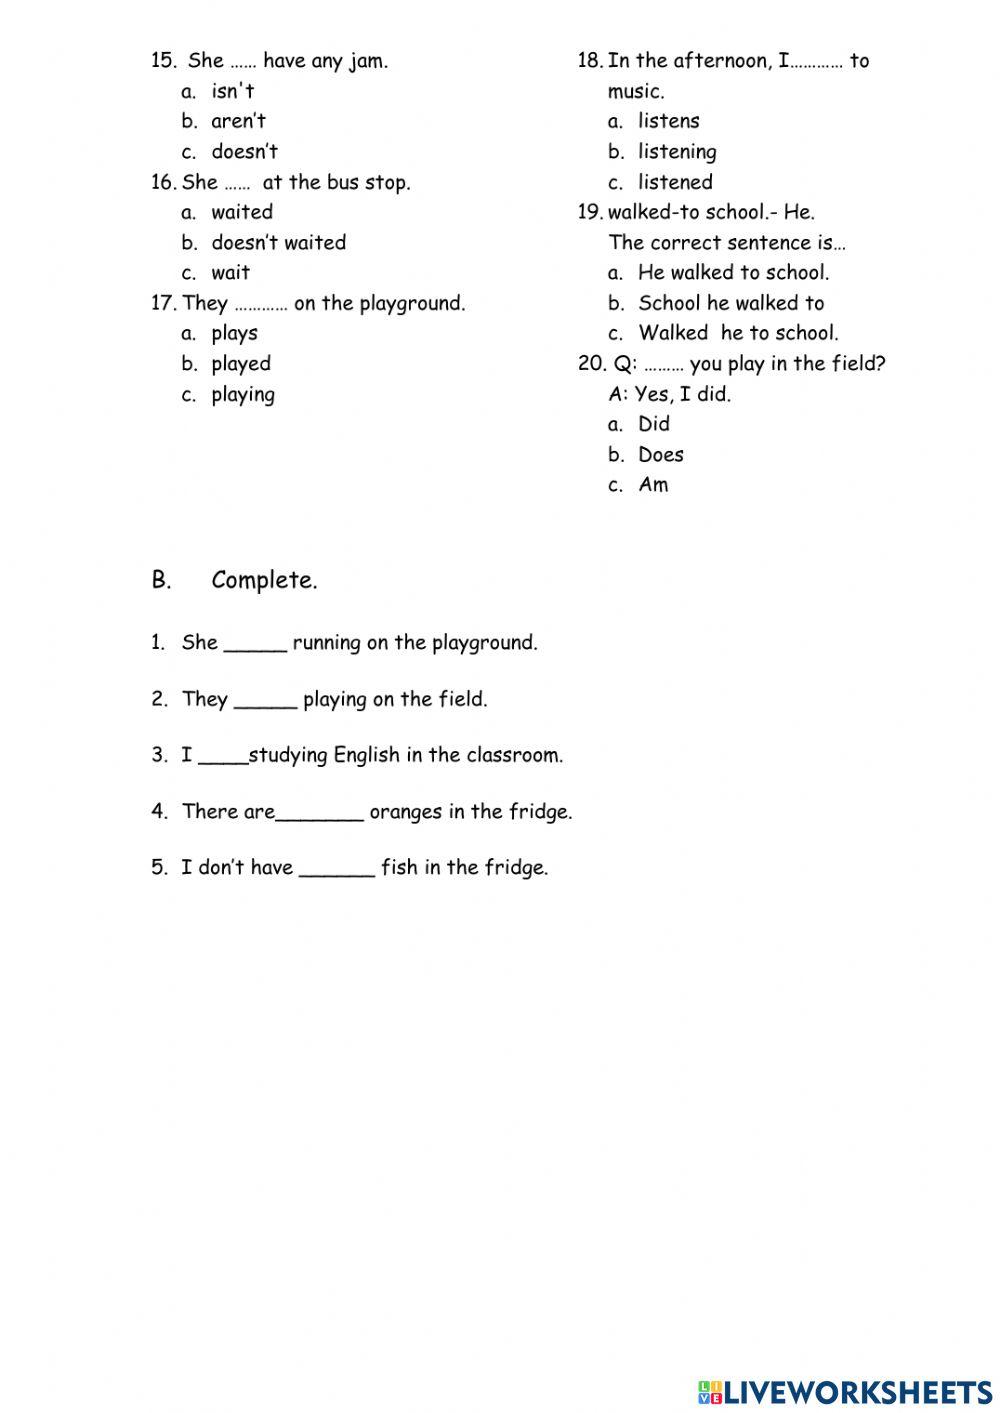 P3 Grammar and Writing Semester 1 test